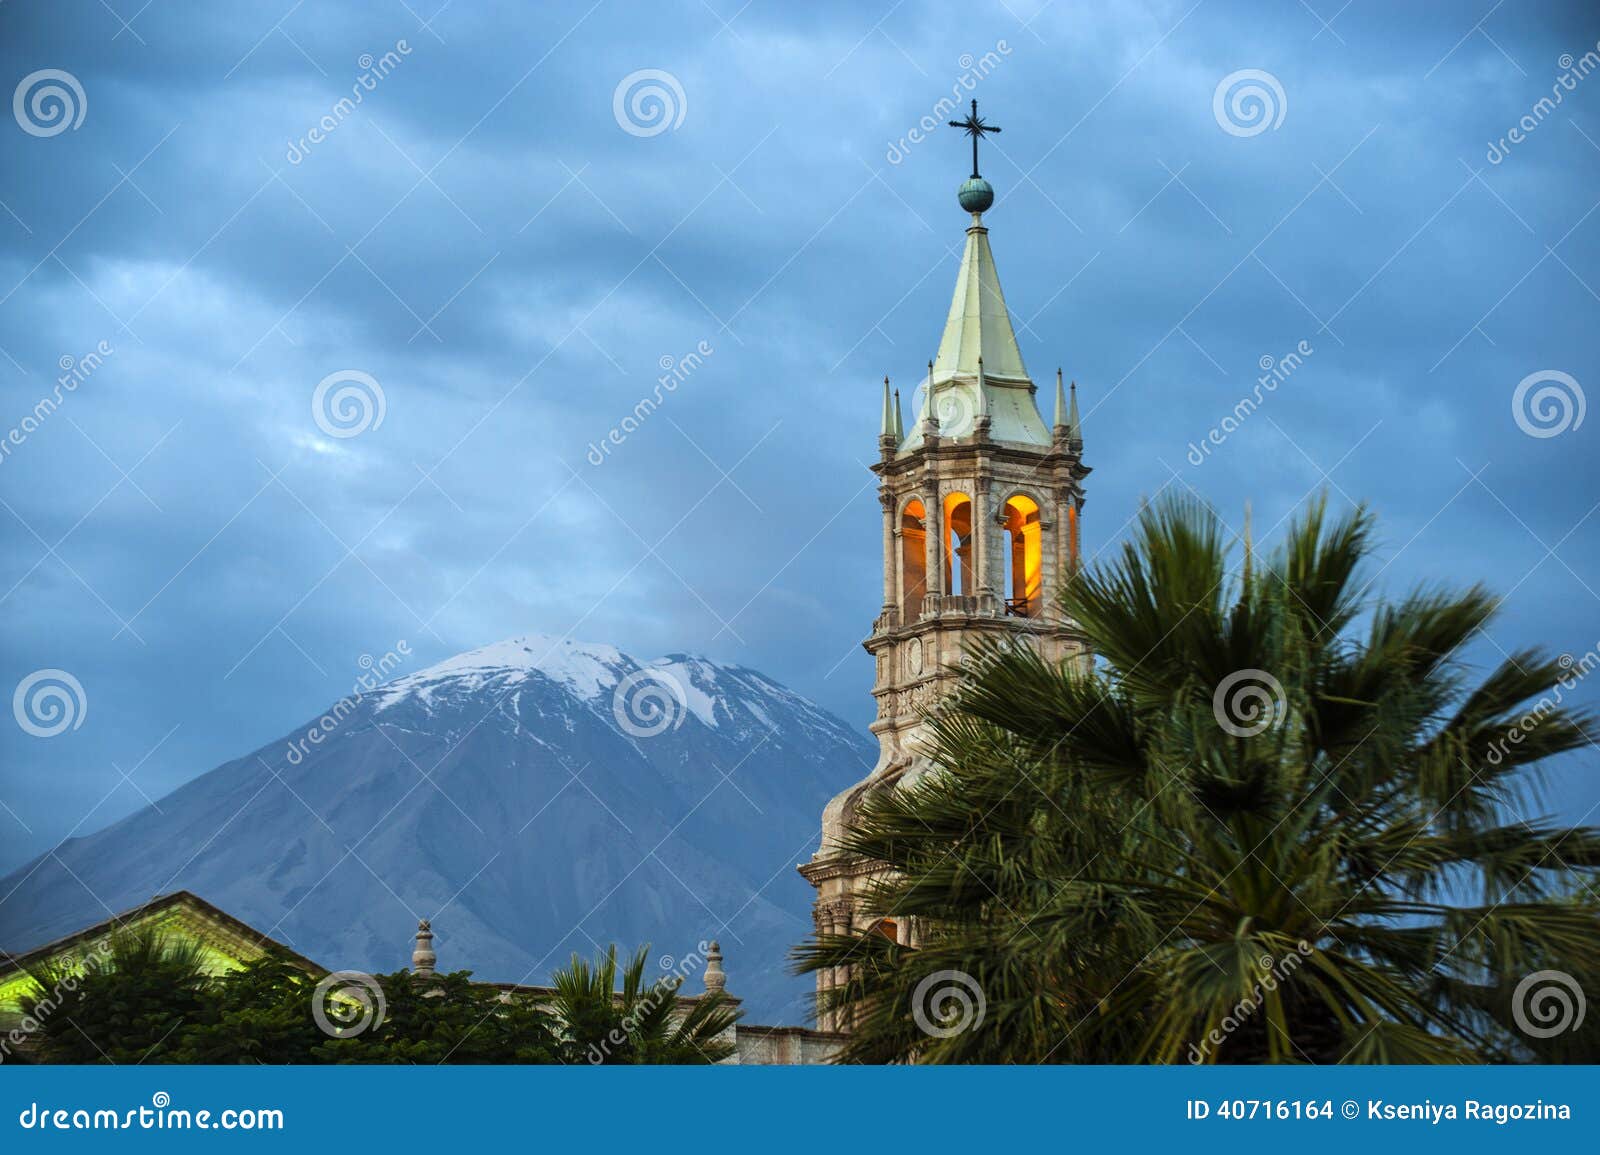 El Misti Volcano and the City of Arequipa, Peru